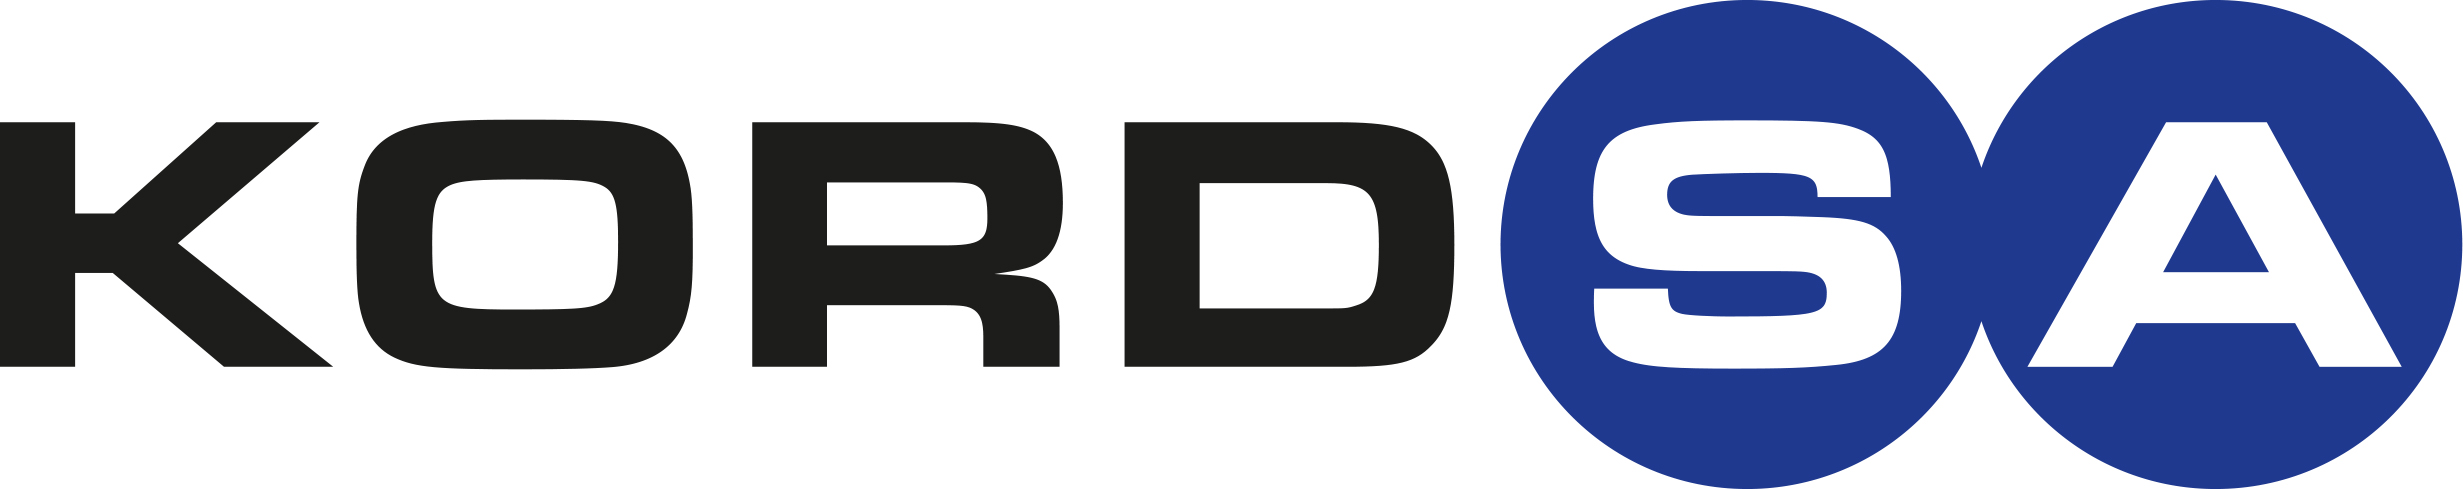 Kordsa Brand Logo